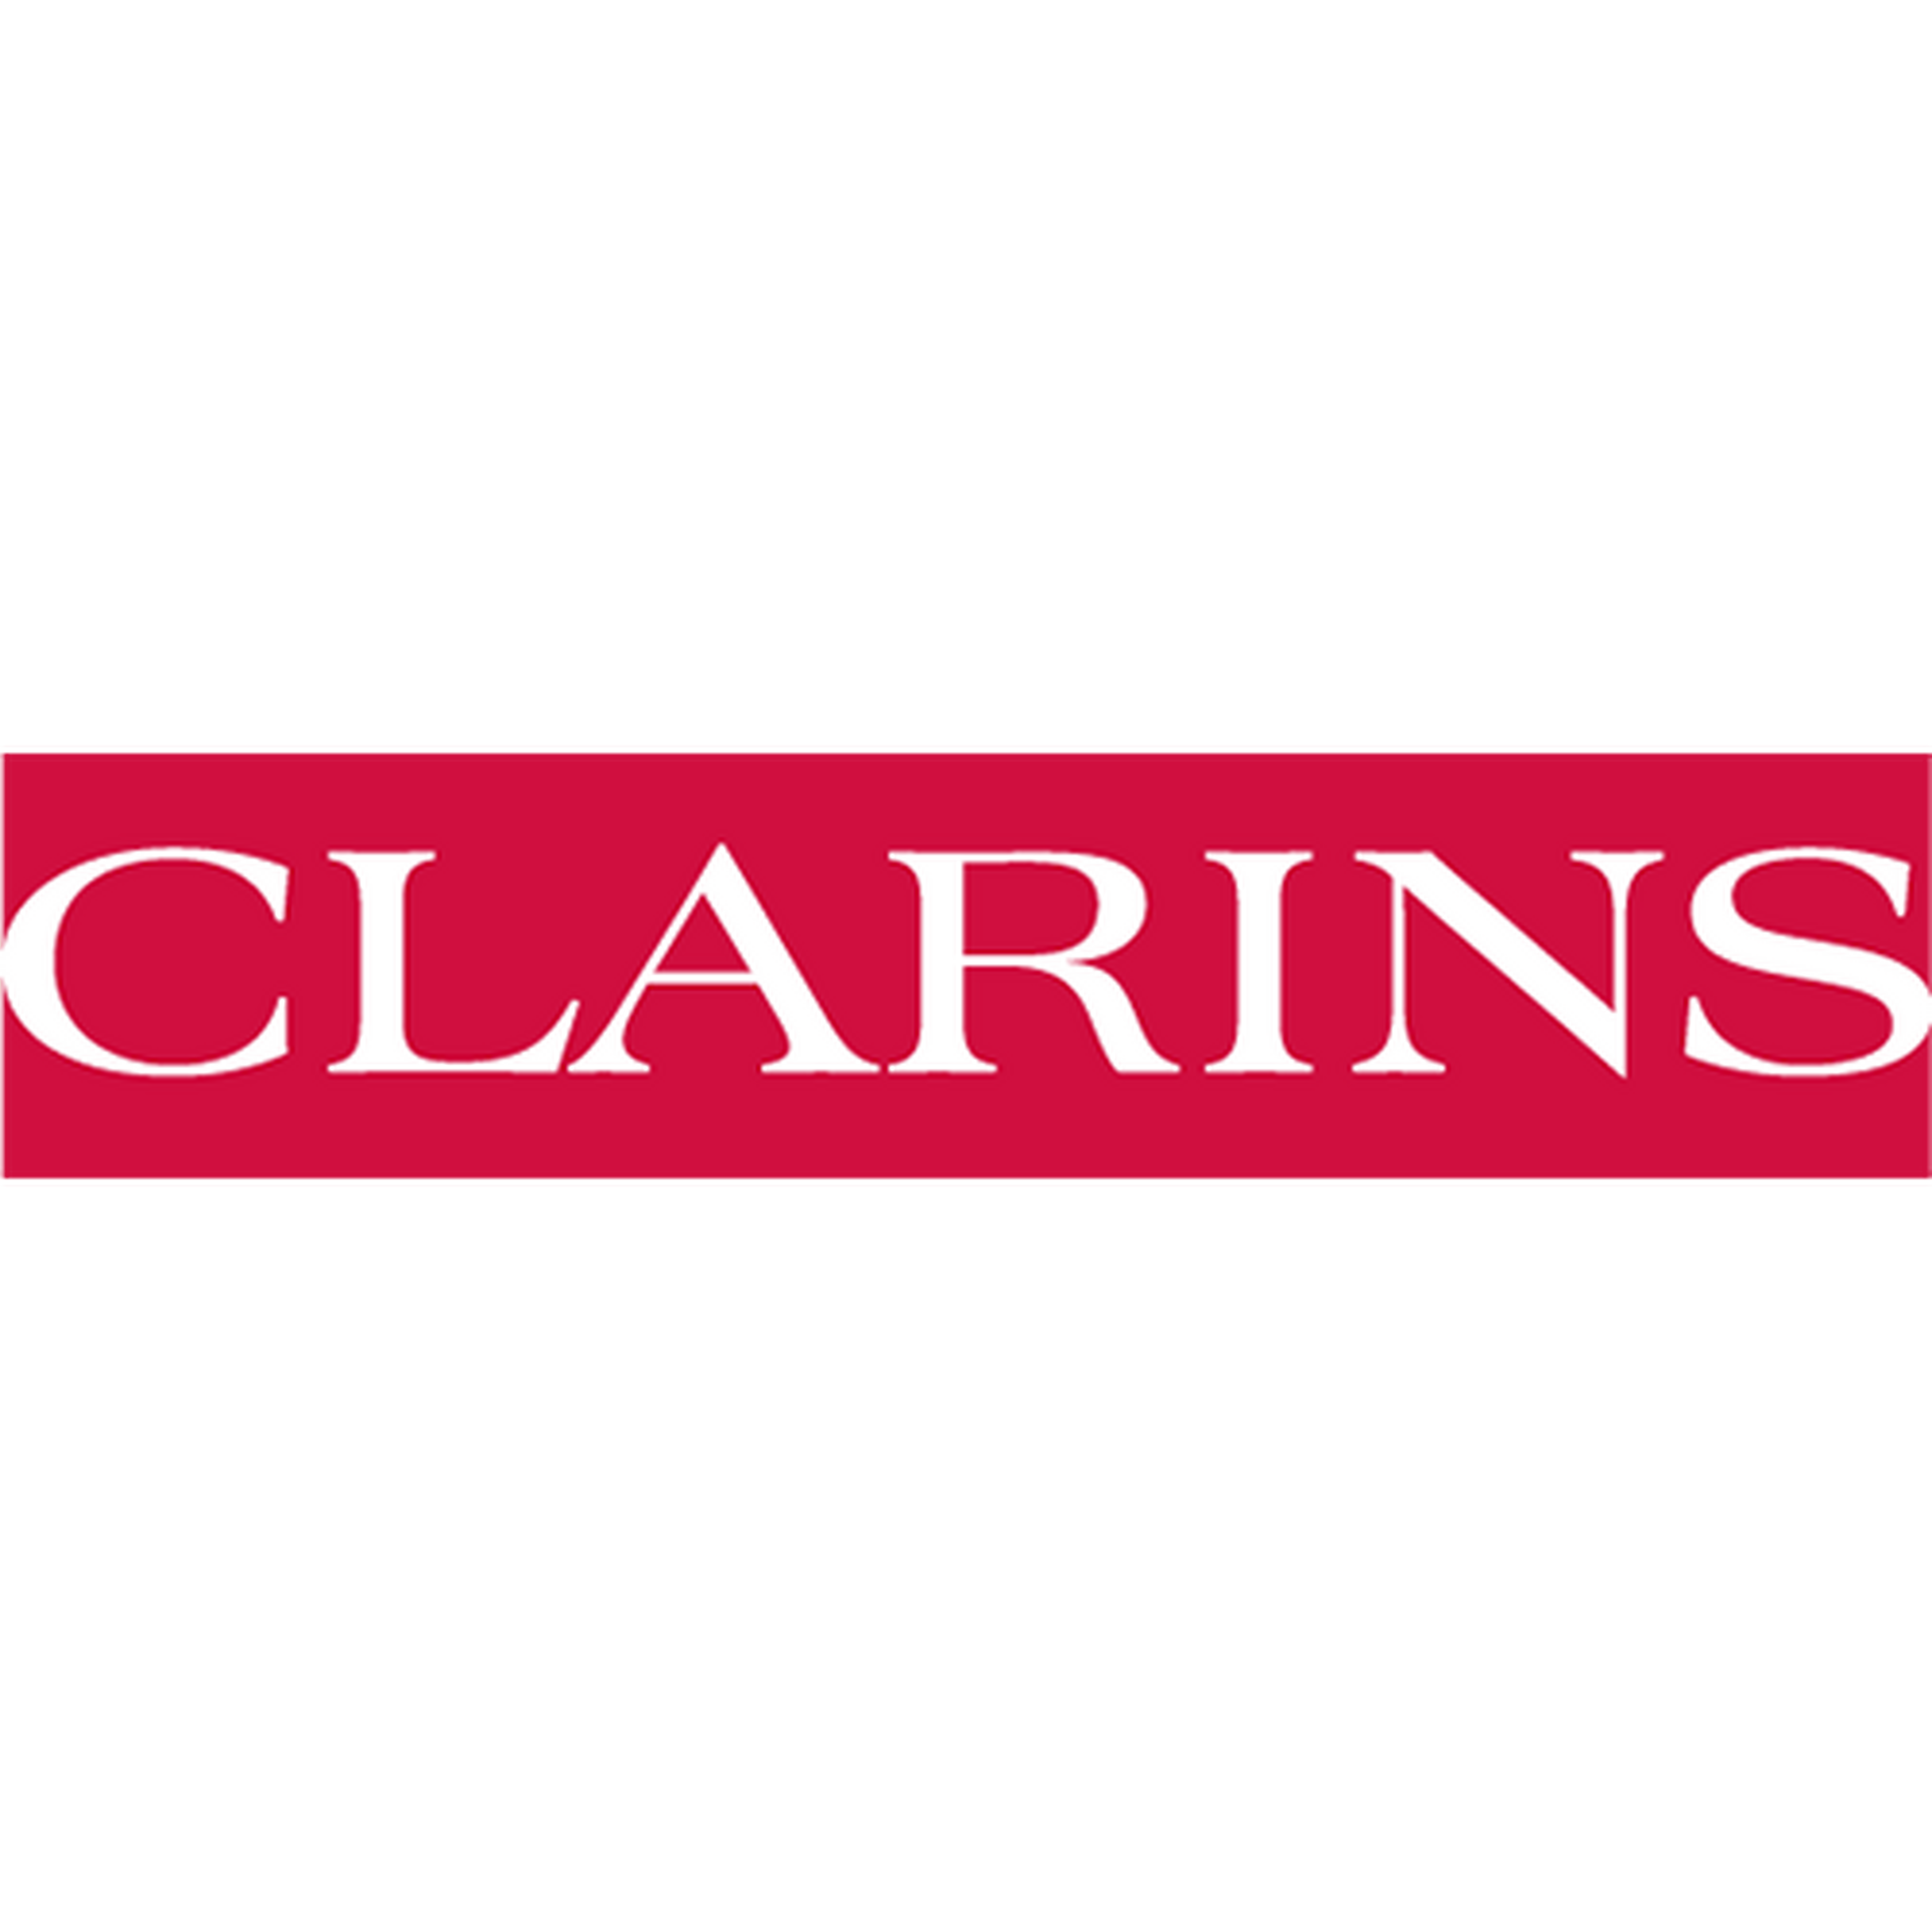 Clarins logotype